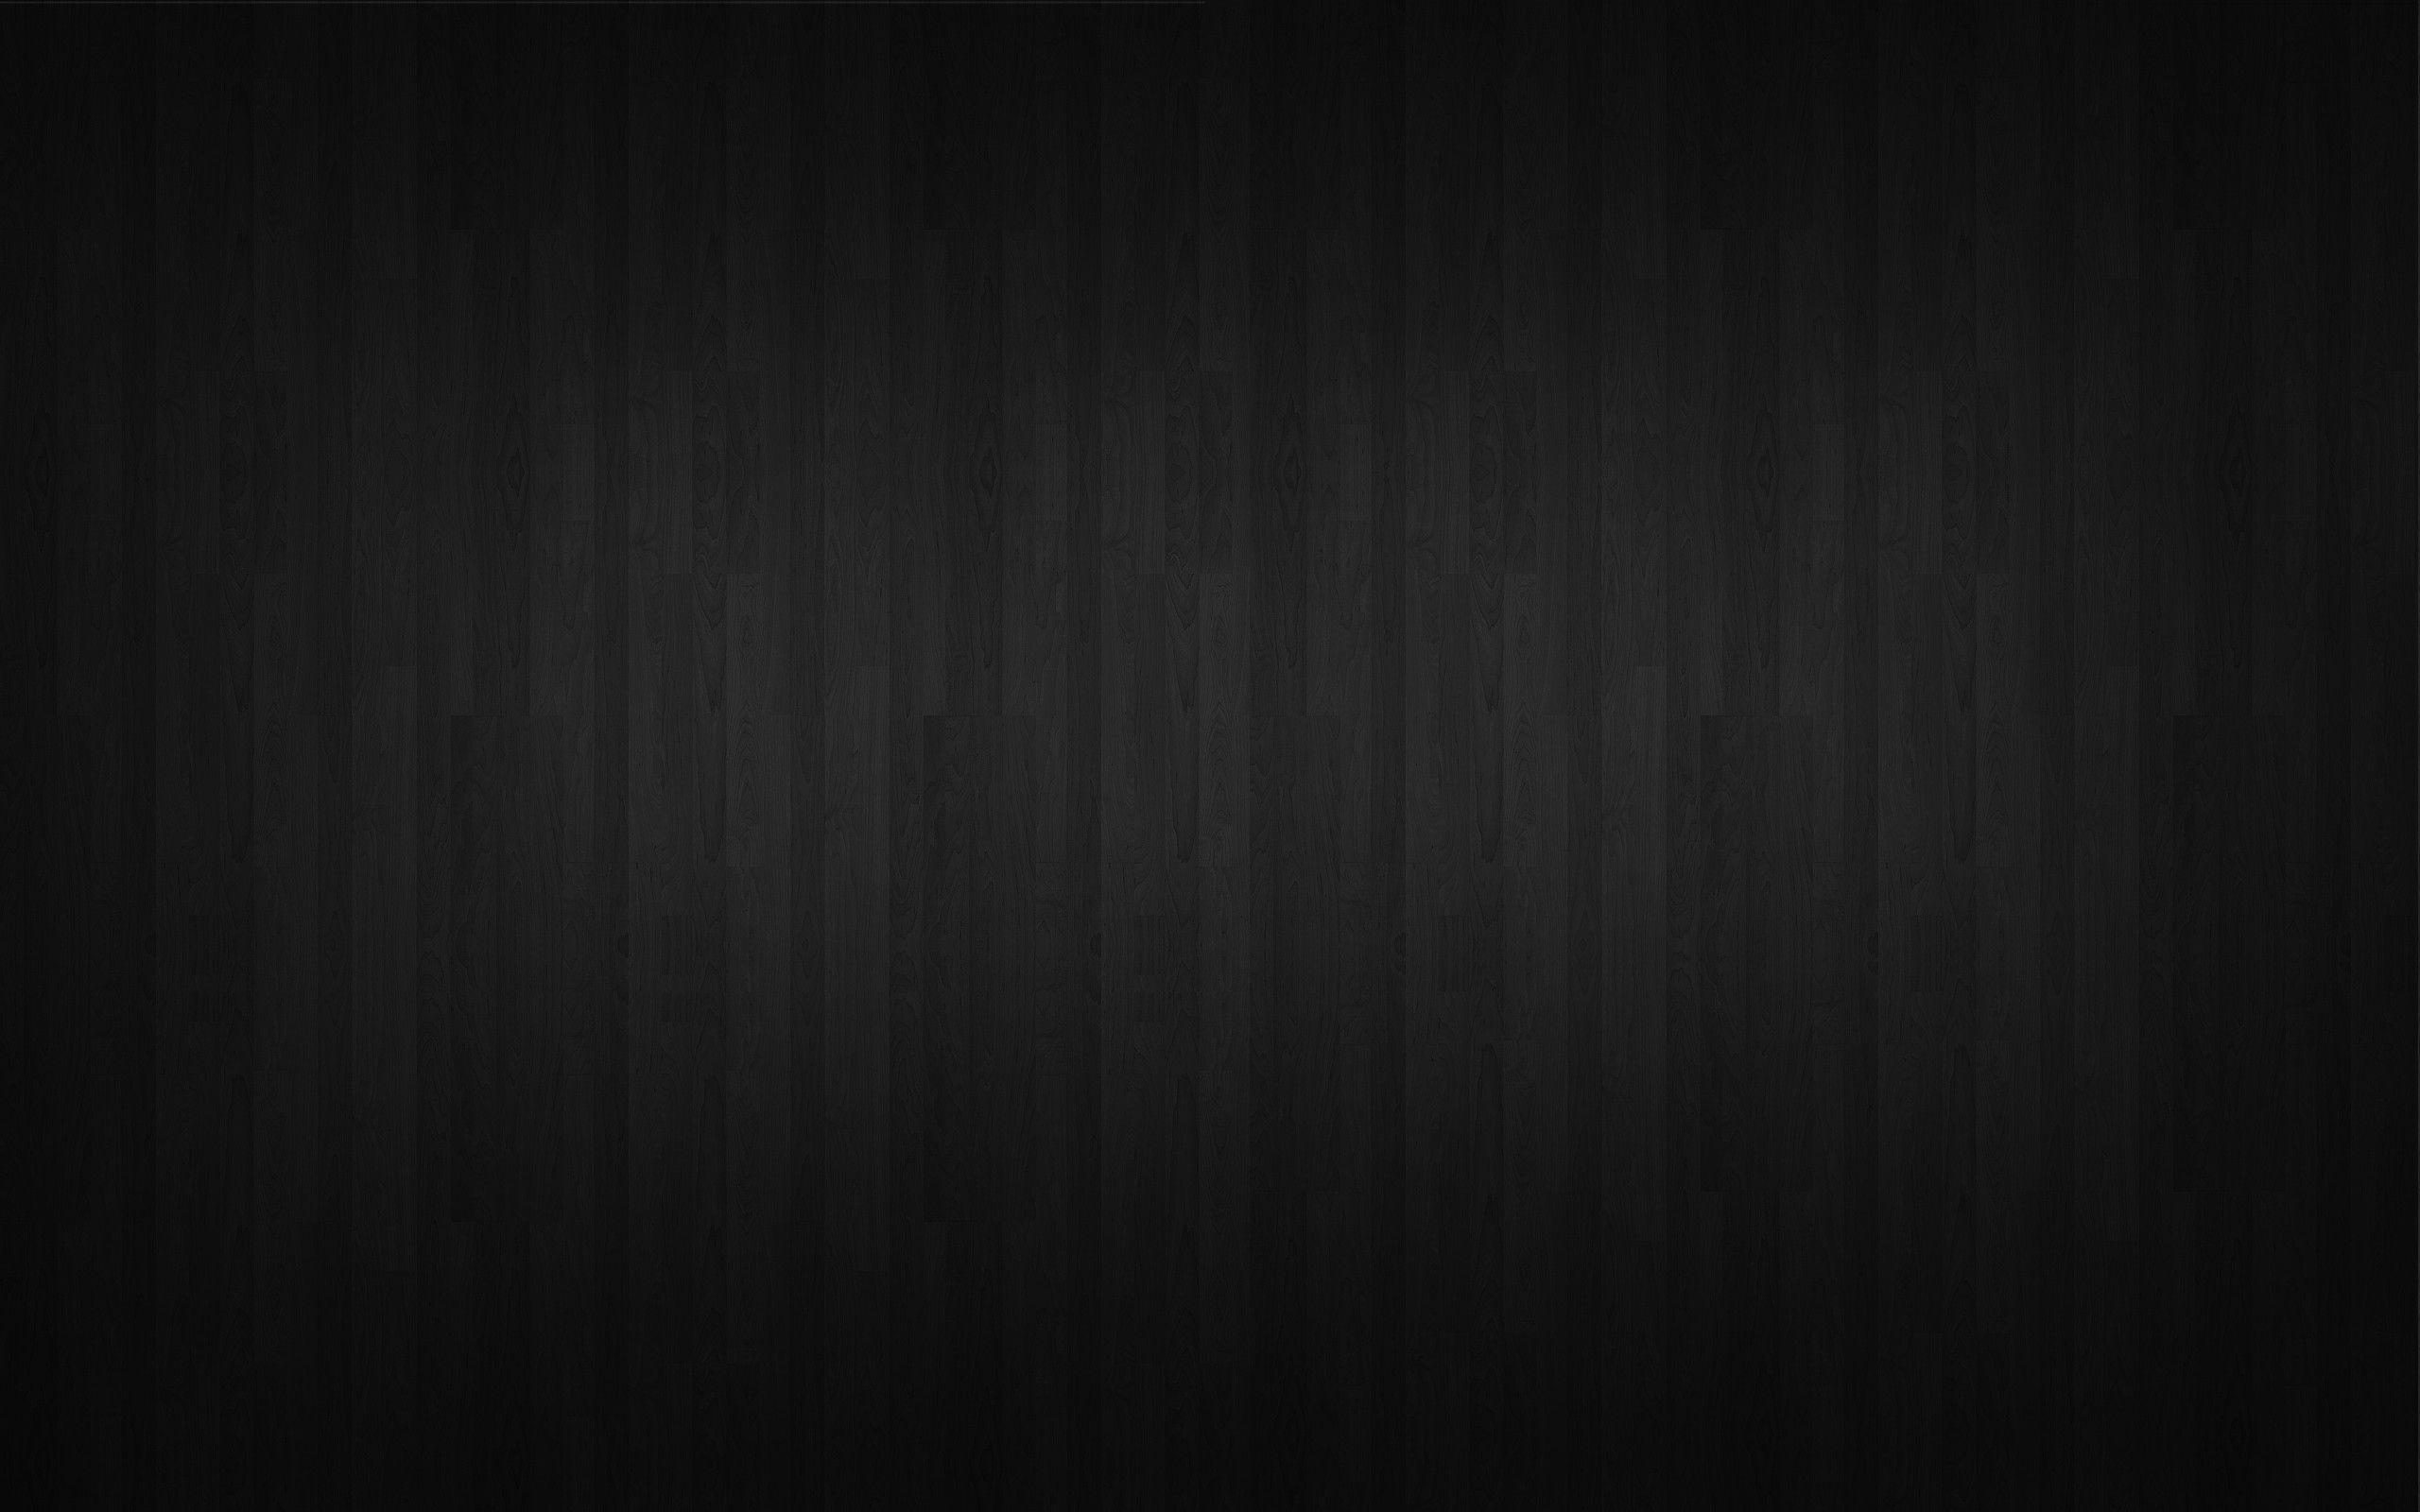 Black wallpaperDownload free amazing full HD background